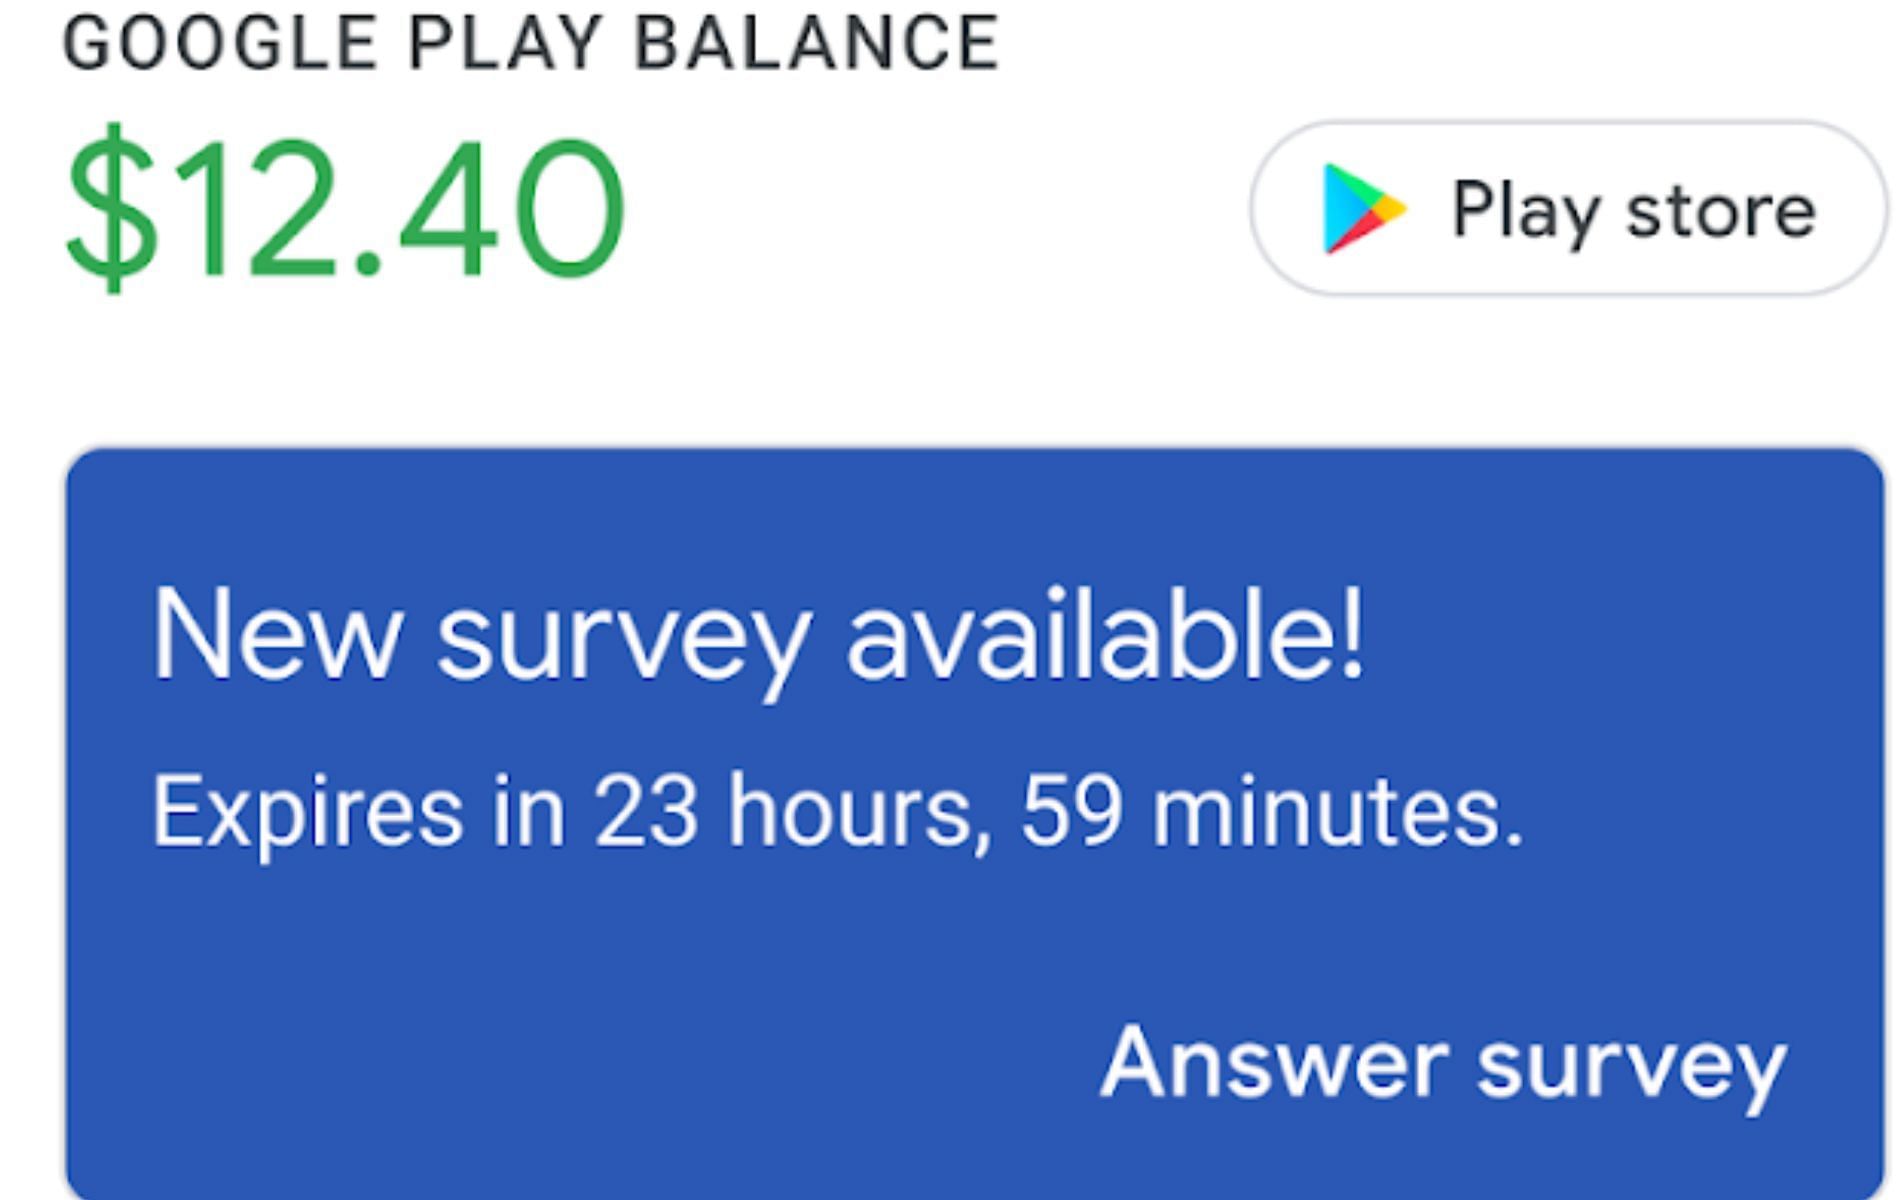 Complete surveys to earn Google Credits (Image via Google Play Store)